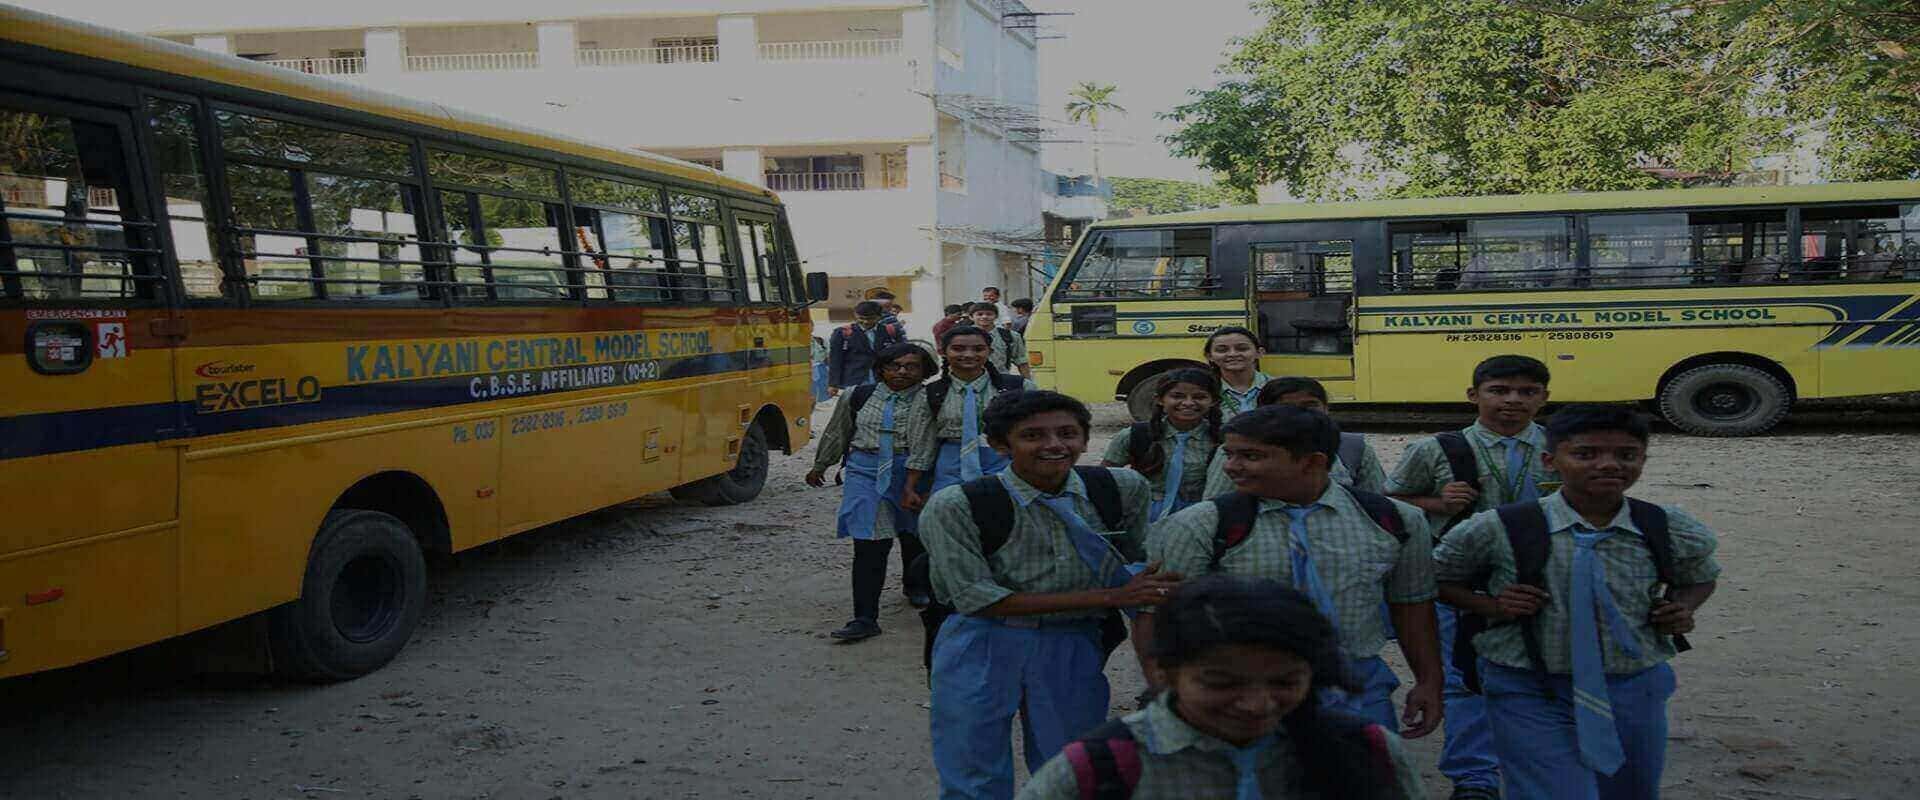 Kalyani Central Model School